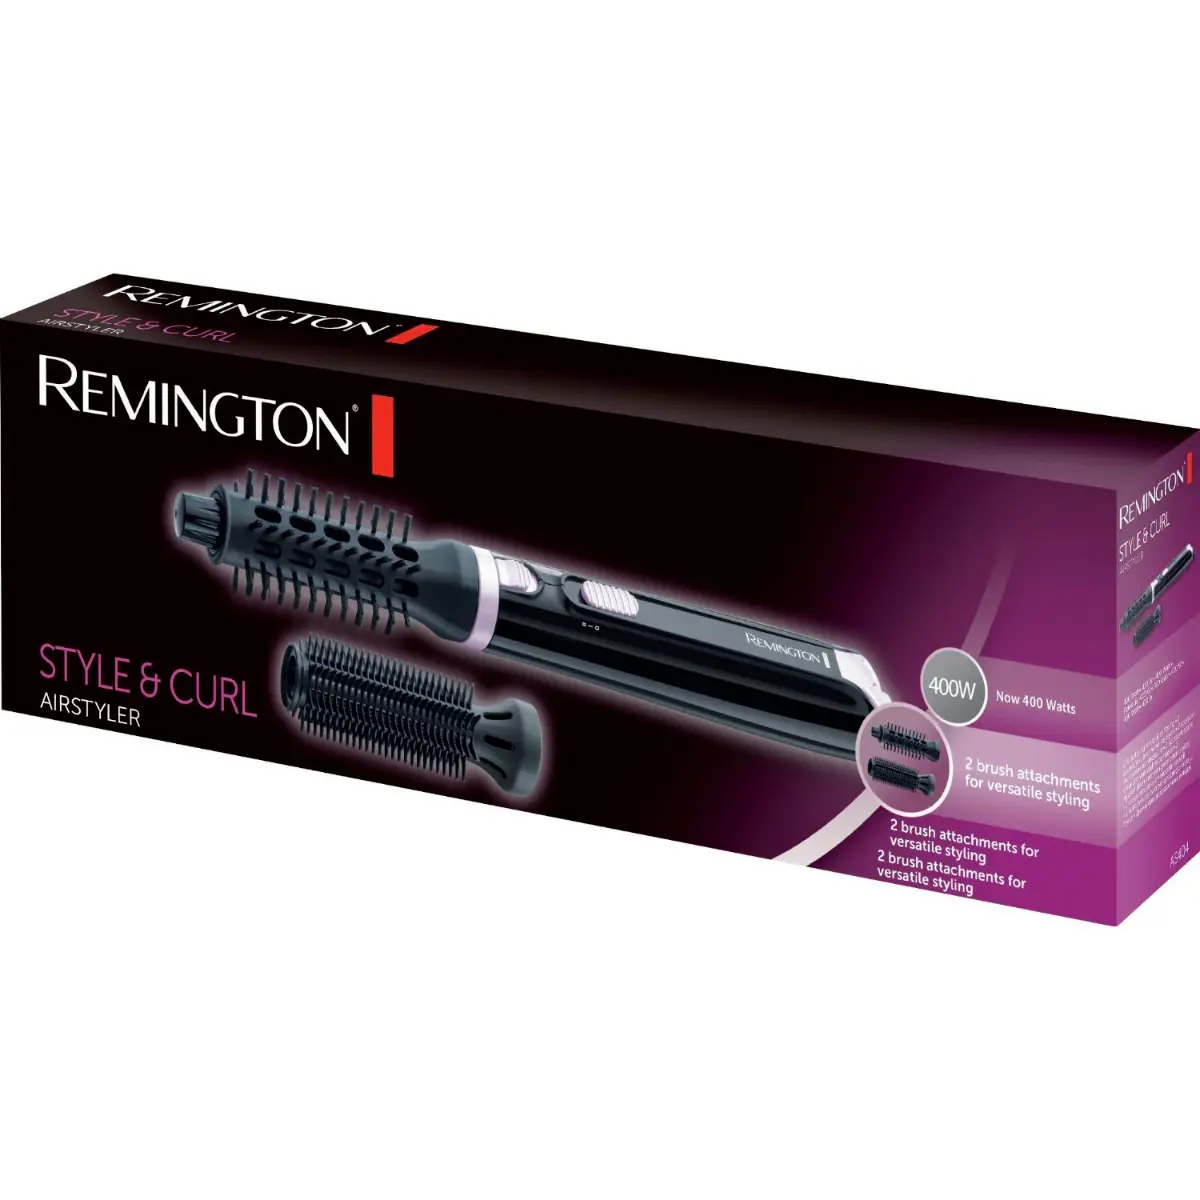 Perie cu aer cald Remington AS404 E51, 400W, 2 trepte de temperatura, 2 accesorii, Negru